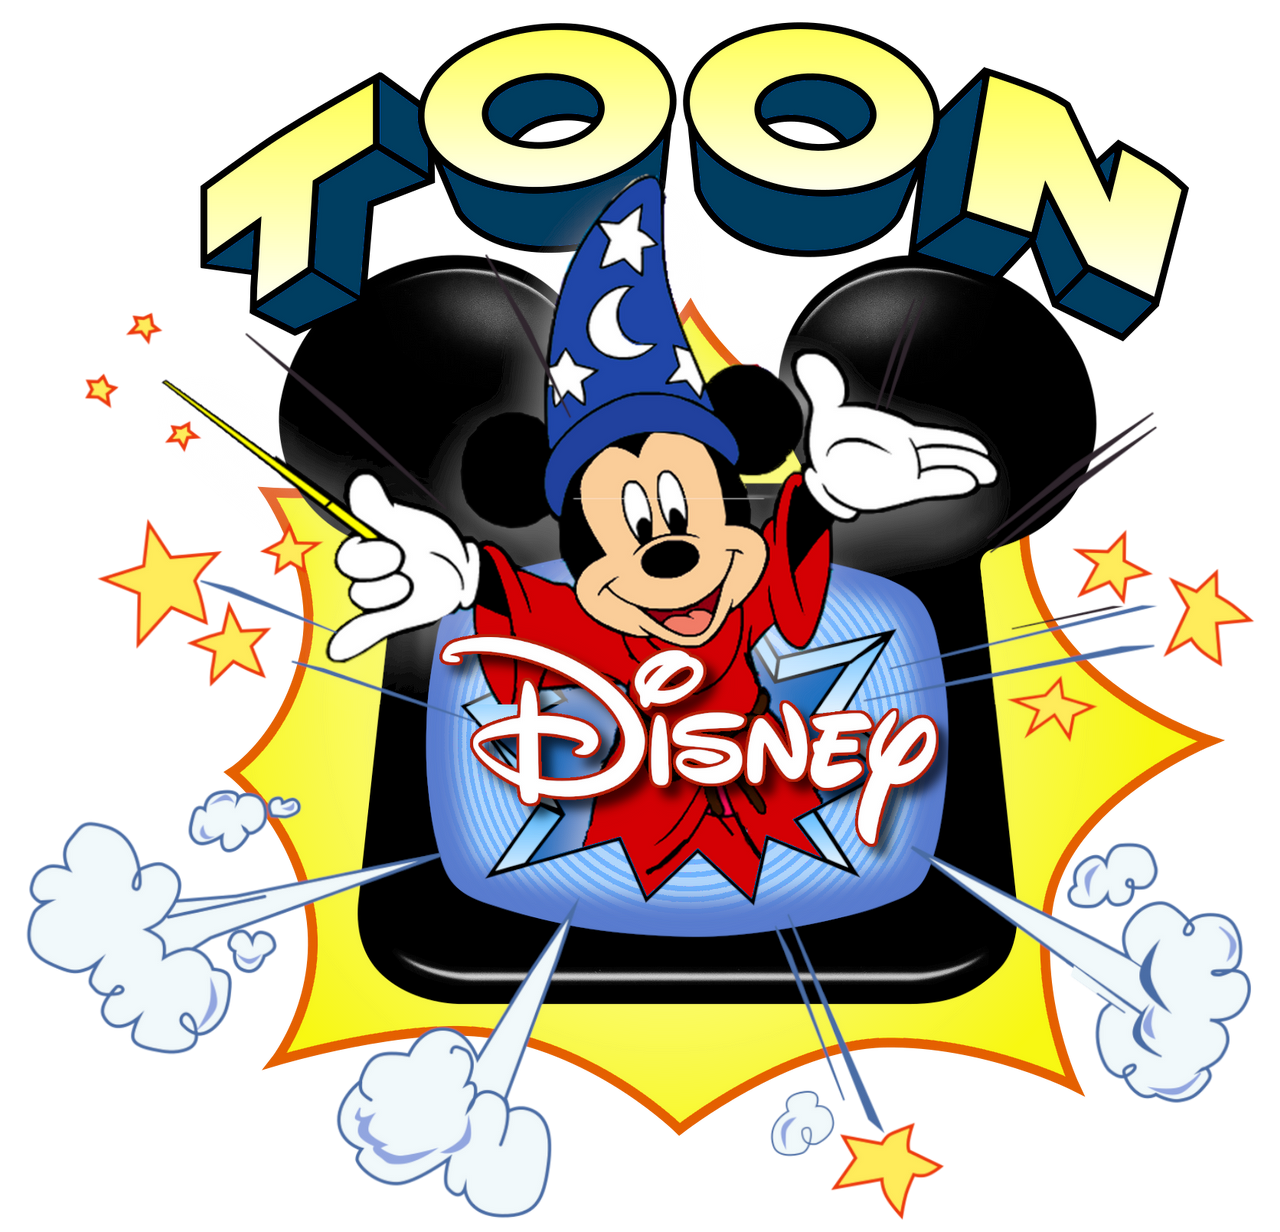 Toon Disney TV Rated | Toon Disney | Fandom